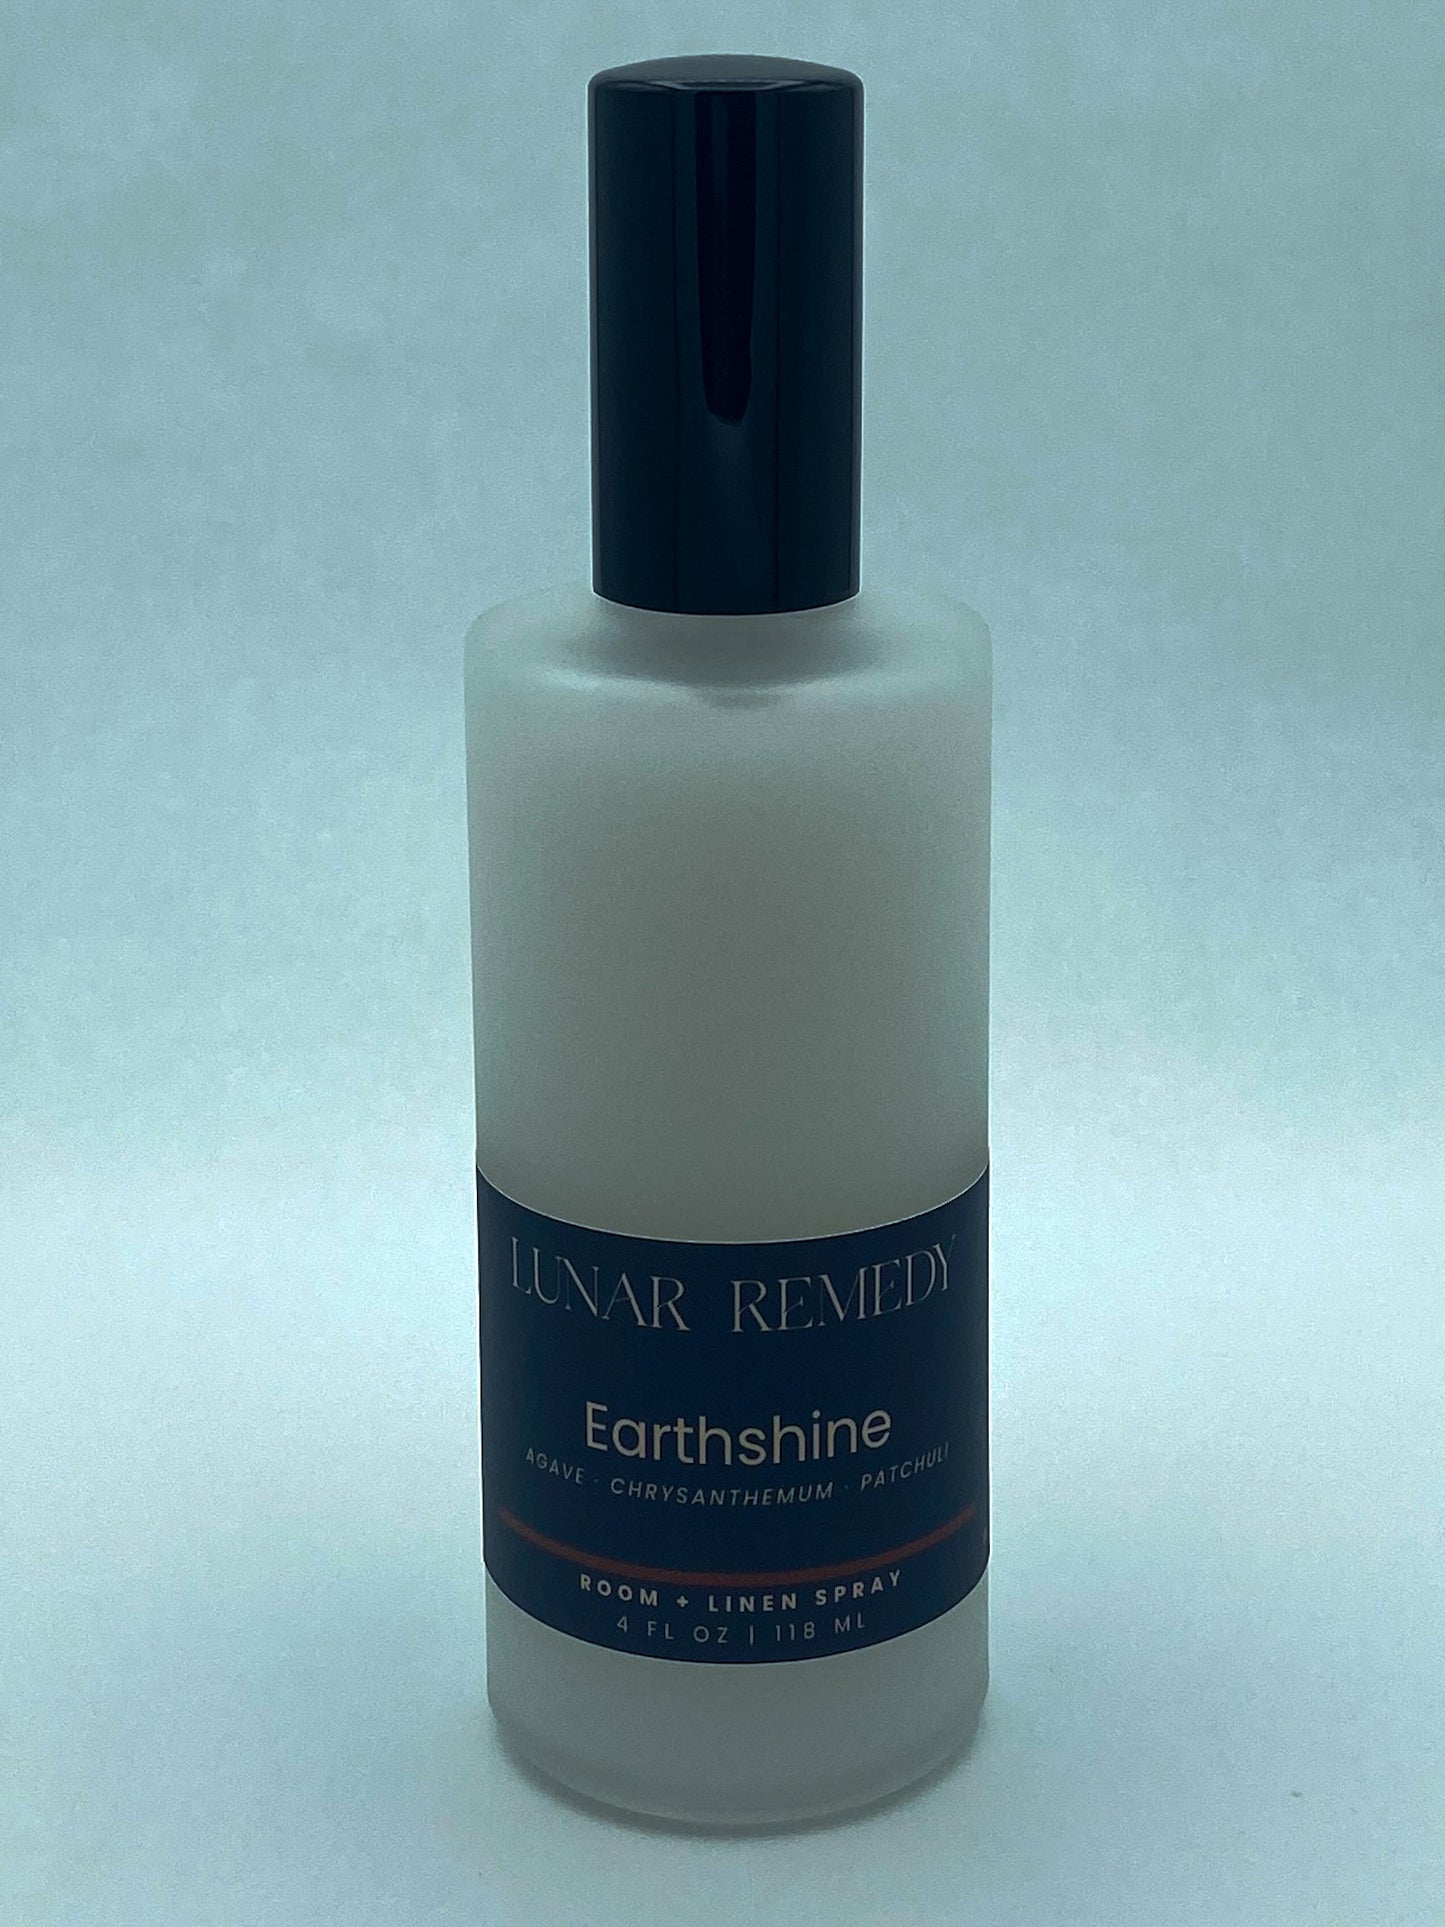 Earthshine Room & Linen Spray